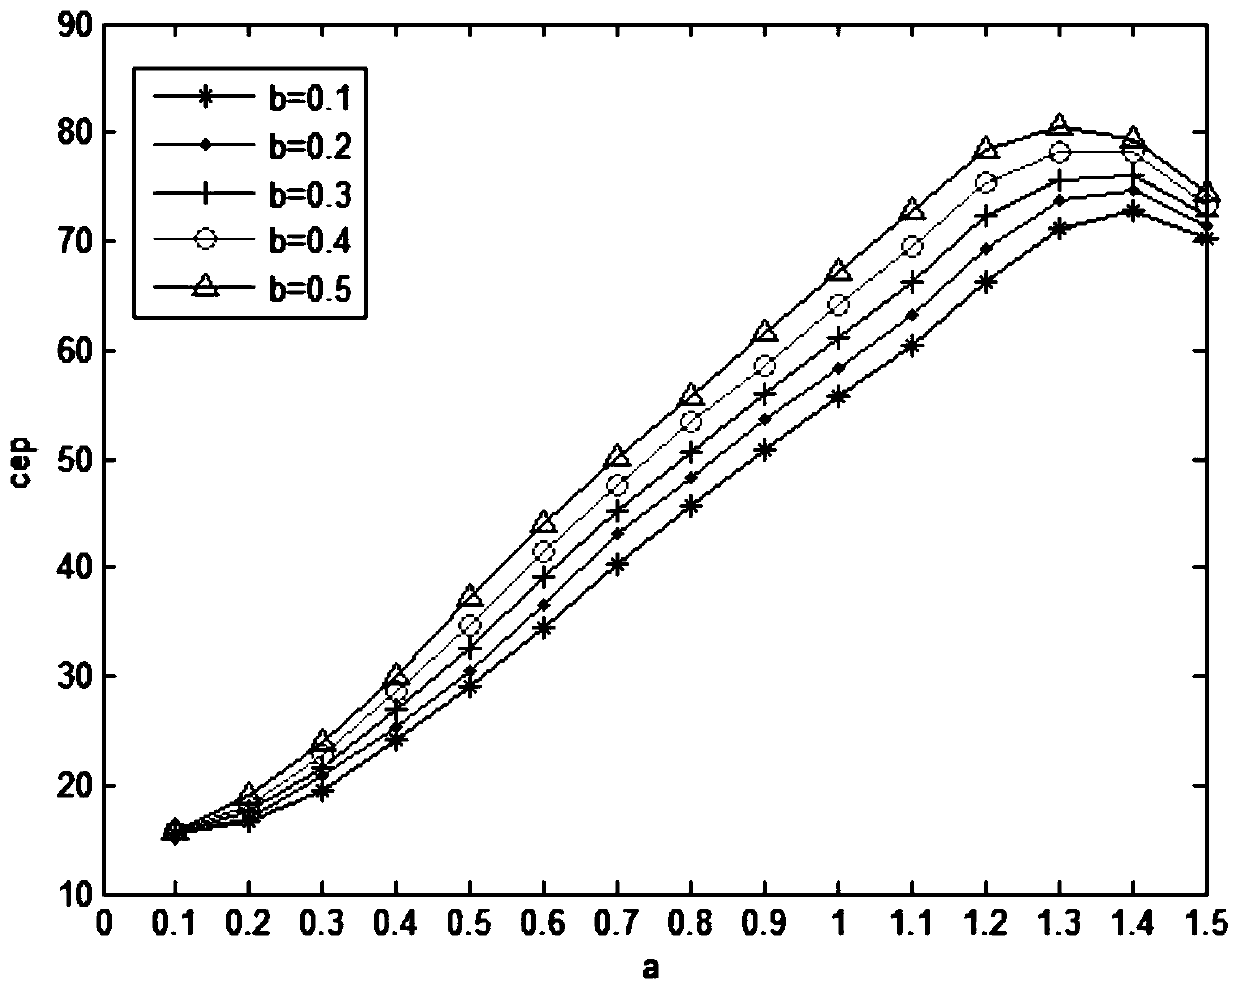 Image defogging method based on improved dynamic atmospheric scattering coefficient function